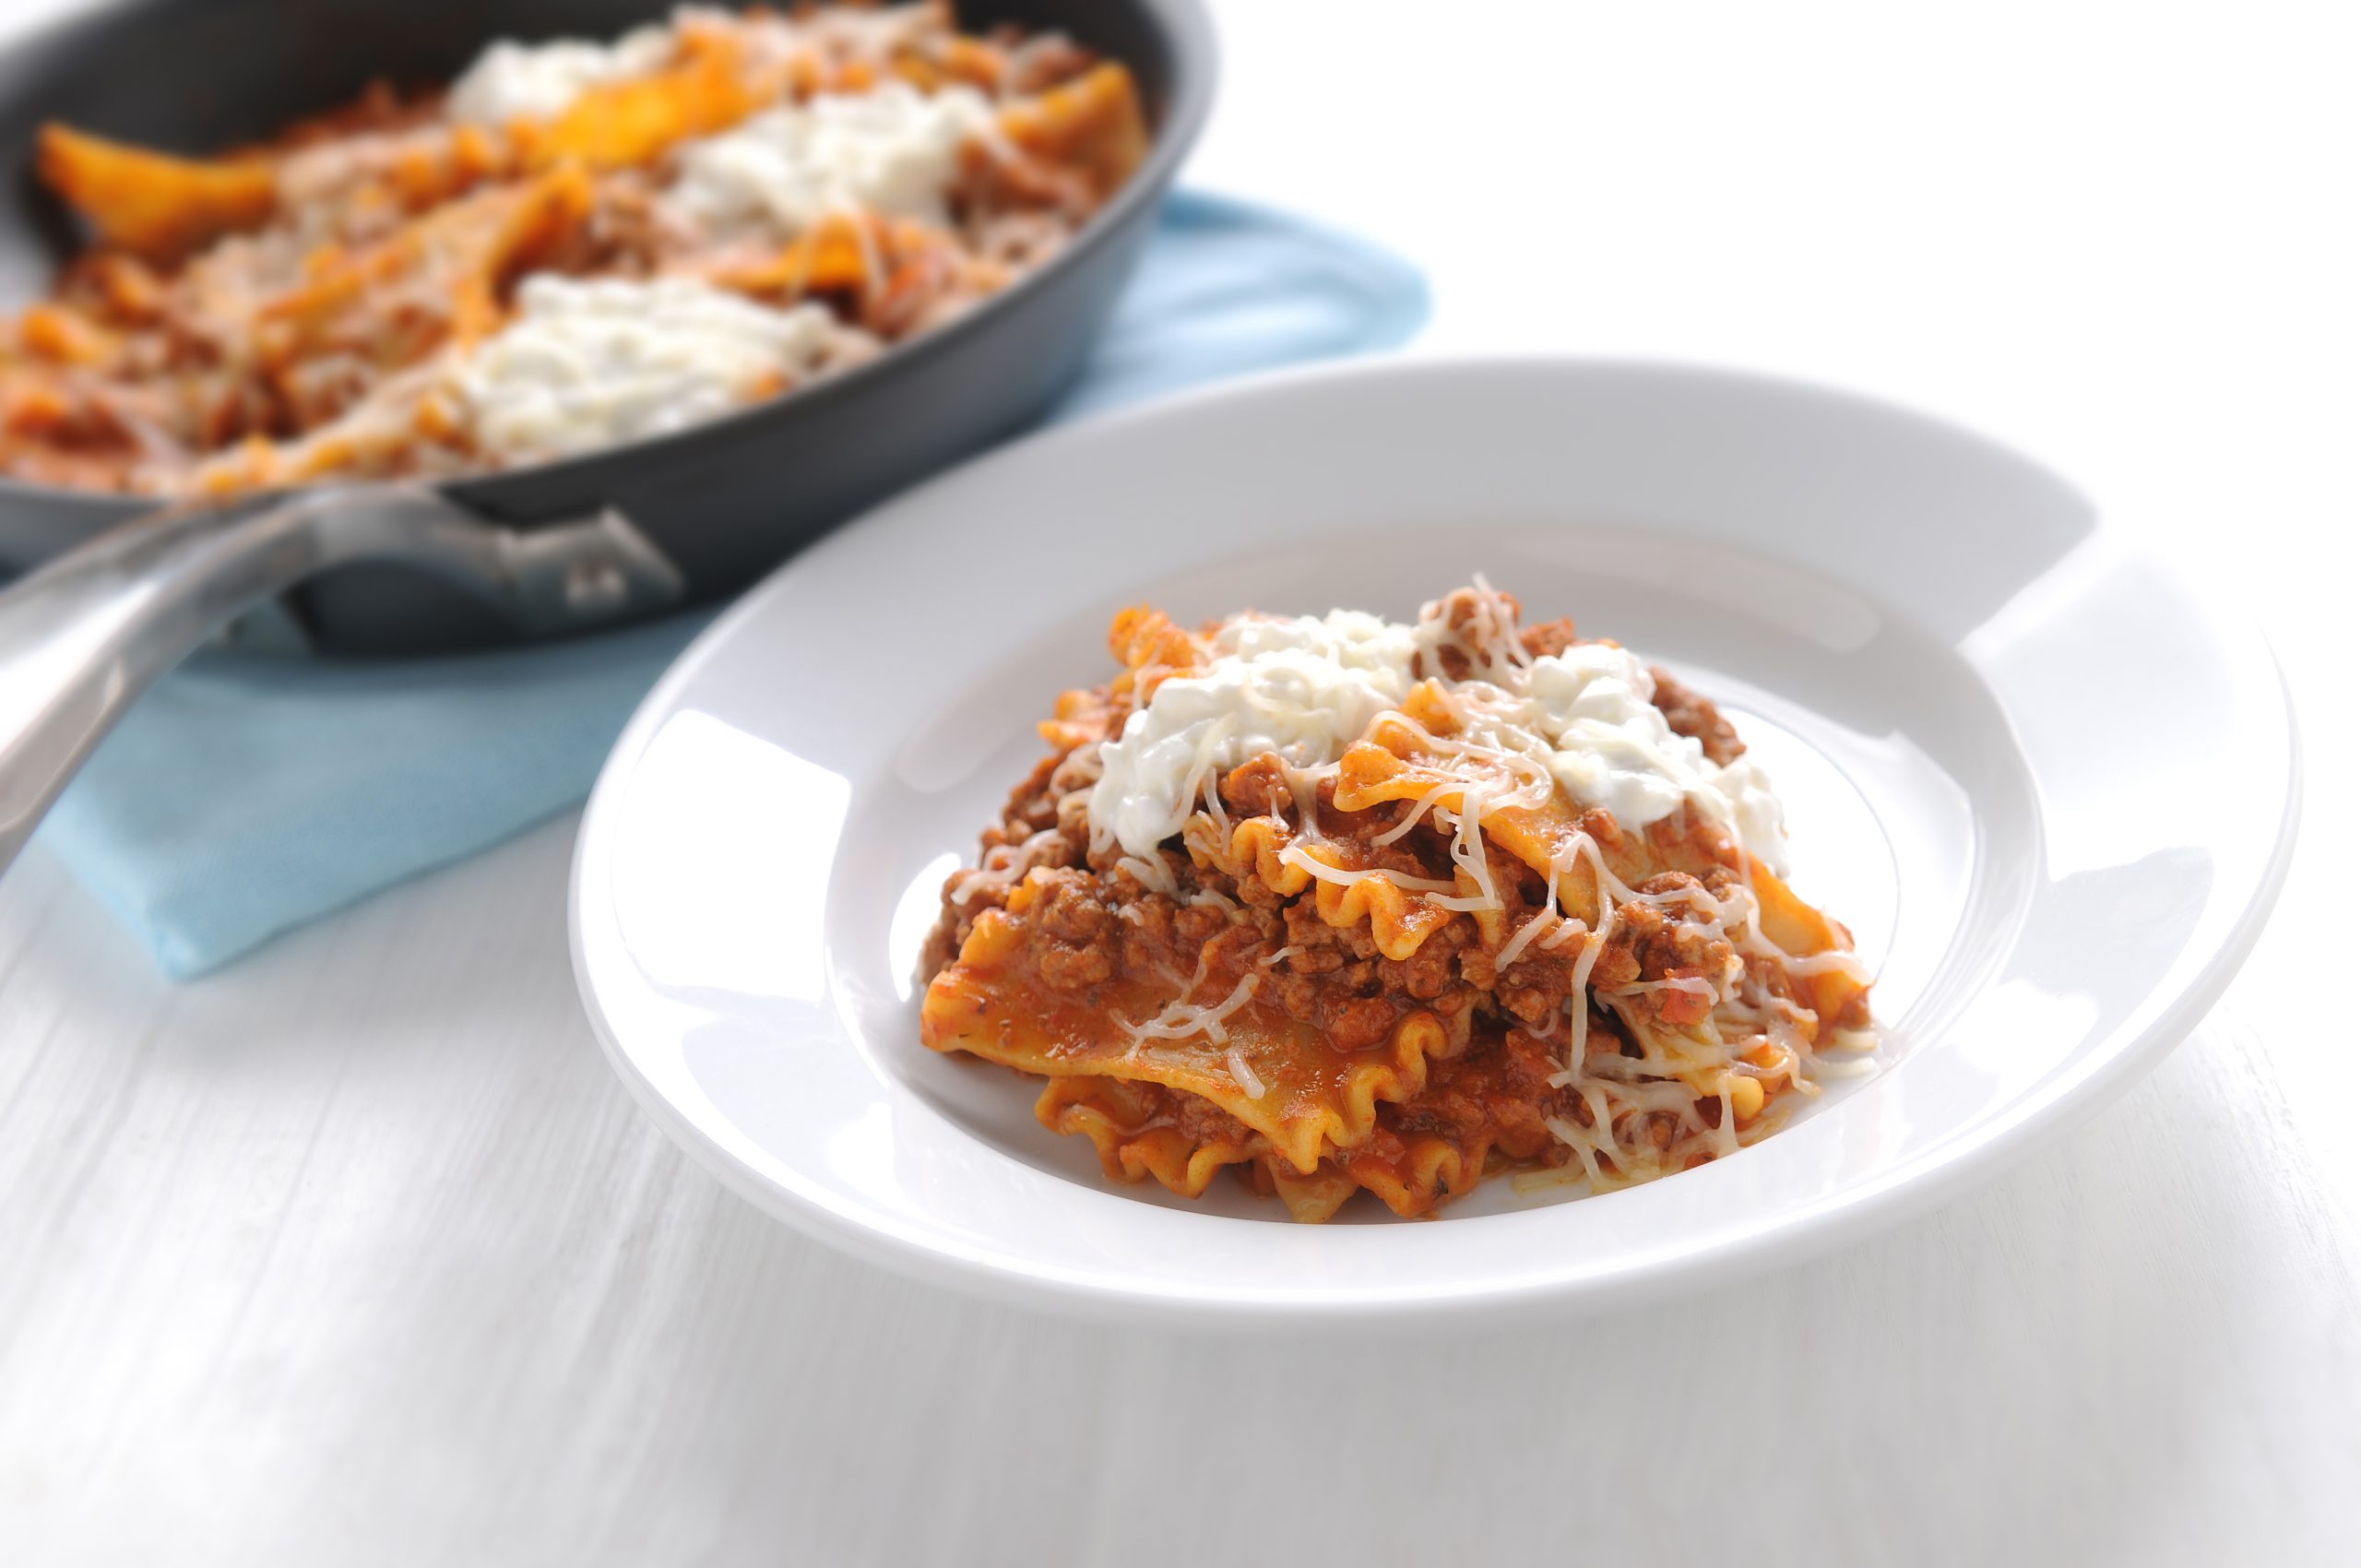 Italian skillet lasagna with ground beef, pasta sauce, ricotta, and Italian shredded cheese